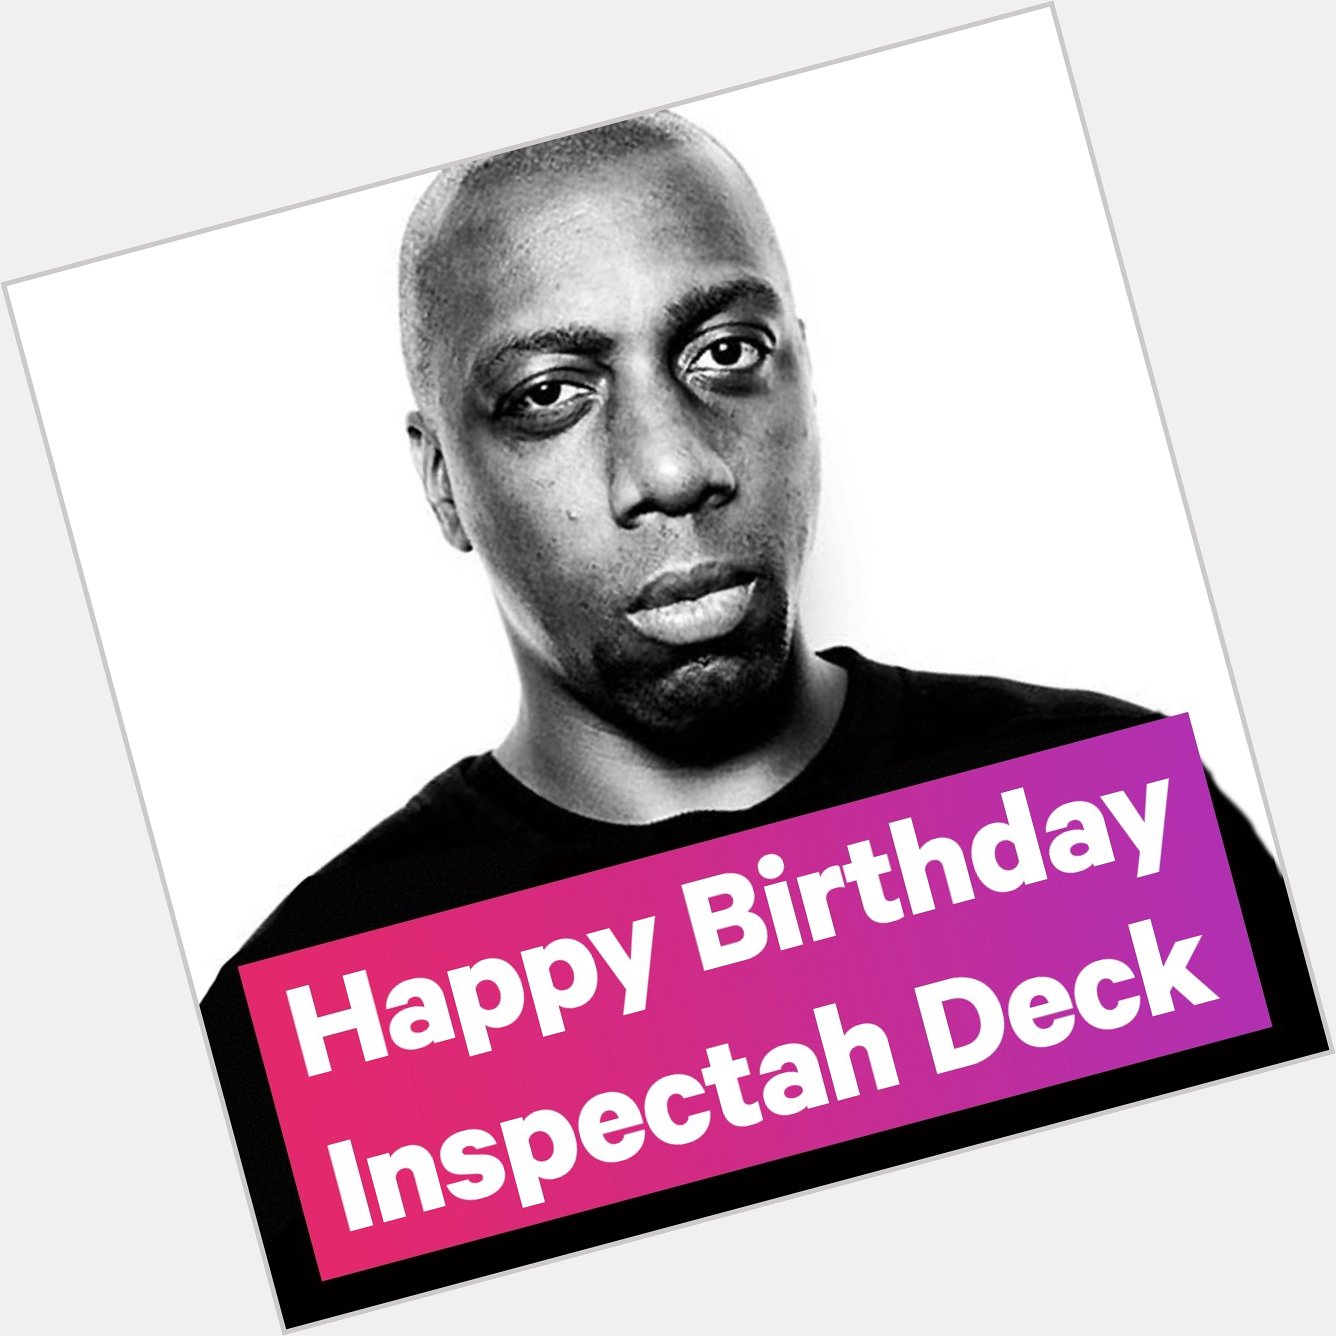 Happy Birthday to Inspectah Deck! 